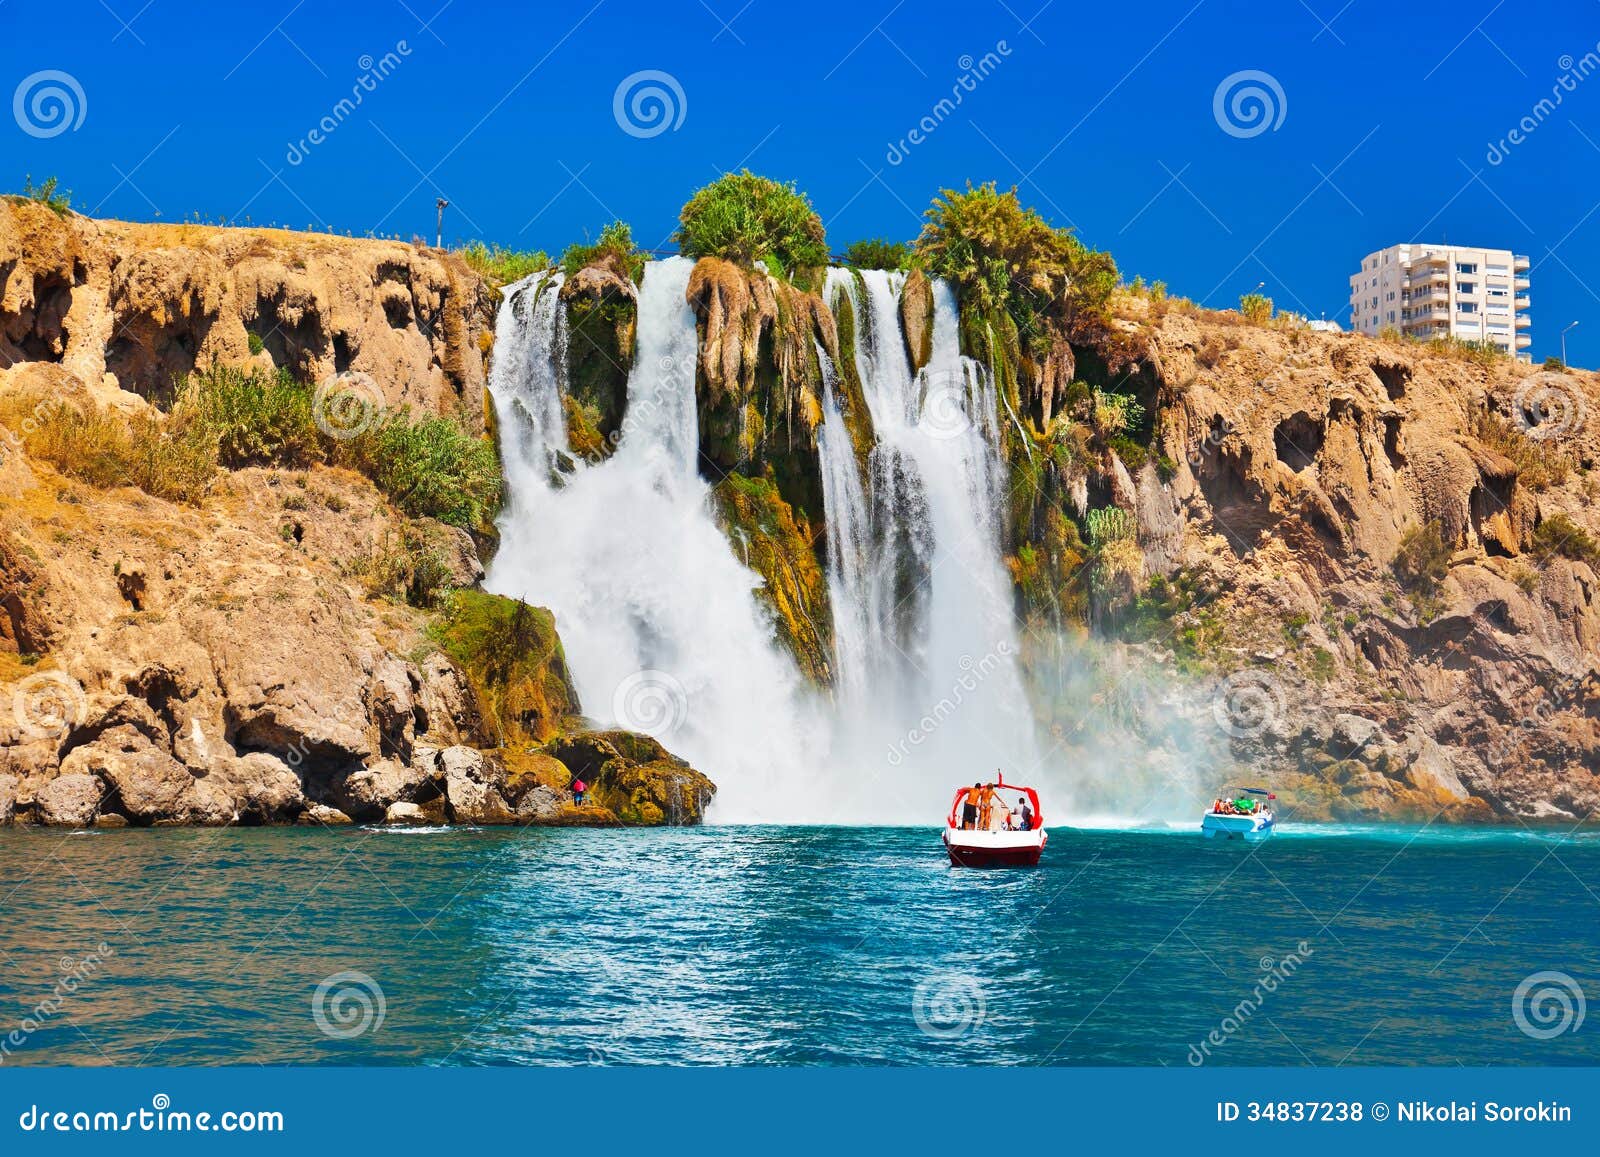 Waterfall Duden At Antalya Turkey Stock Photo Image Of Green Flowing